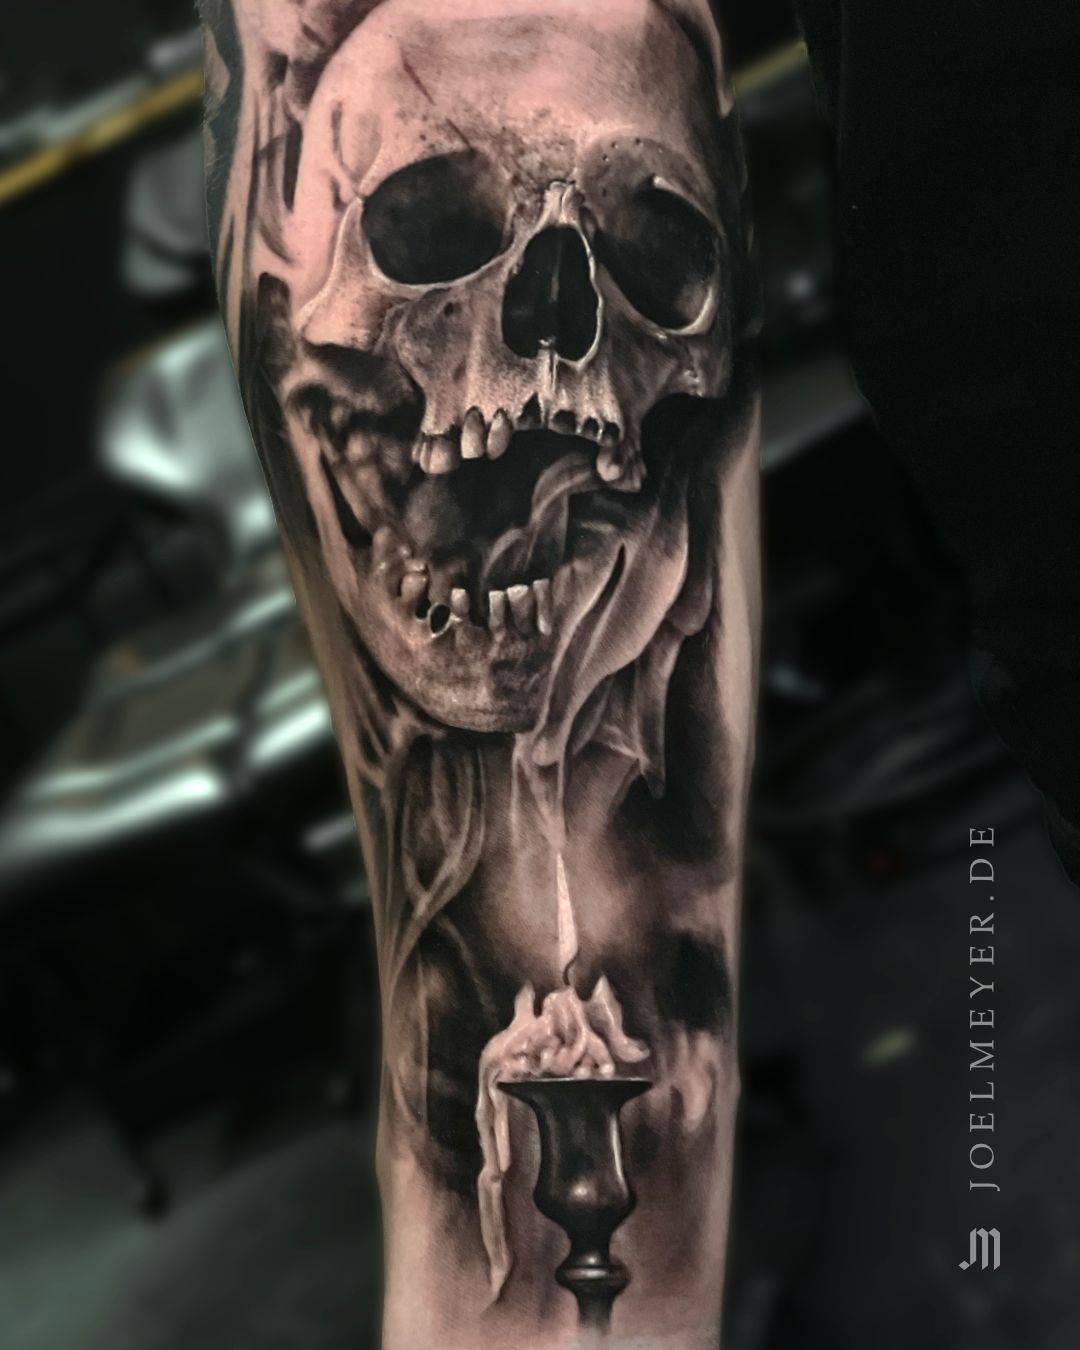 Black and grey skull tattoo on the inner forearm